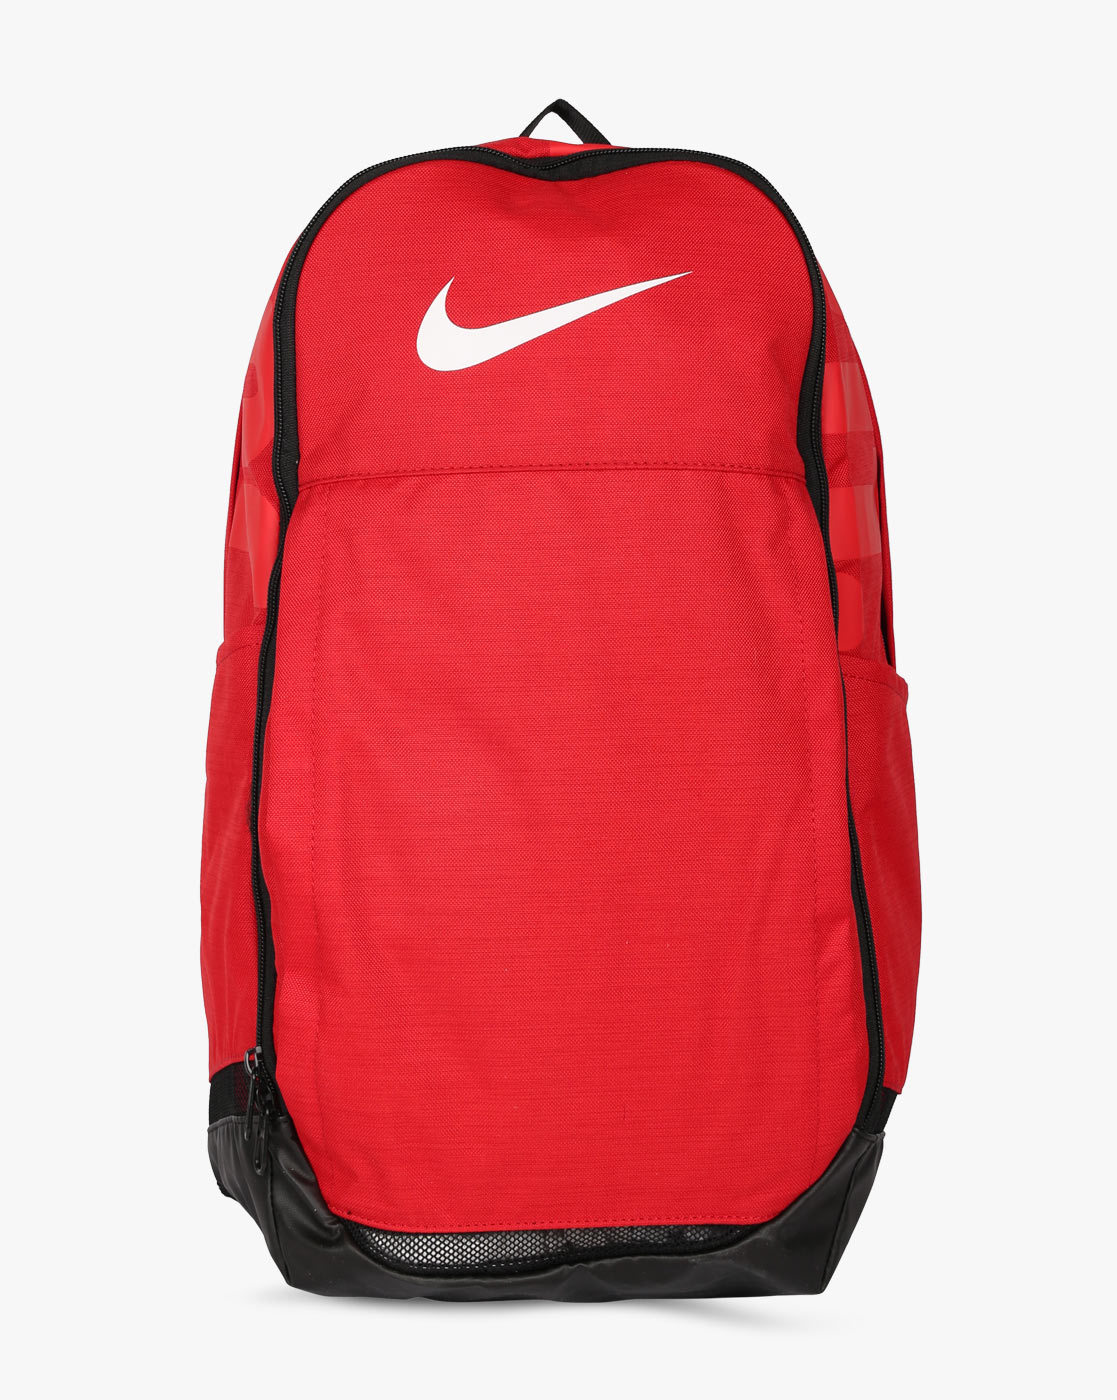 Nike Air Jordan Men's Fluid Backpack Gym Red, Sports School Travel Bag |  eBay